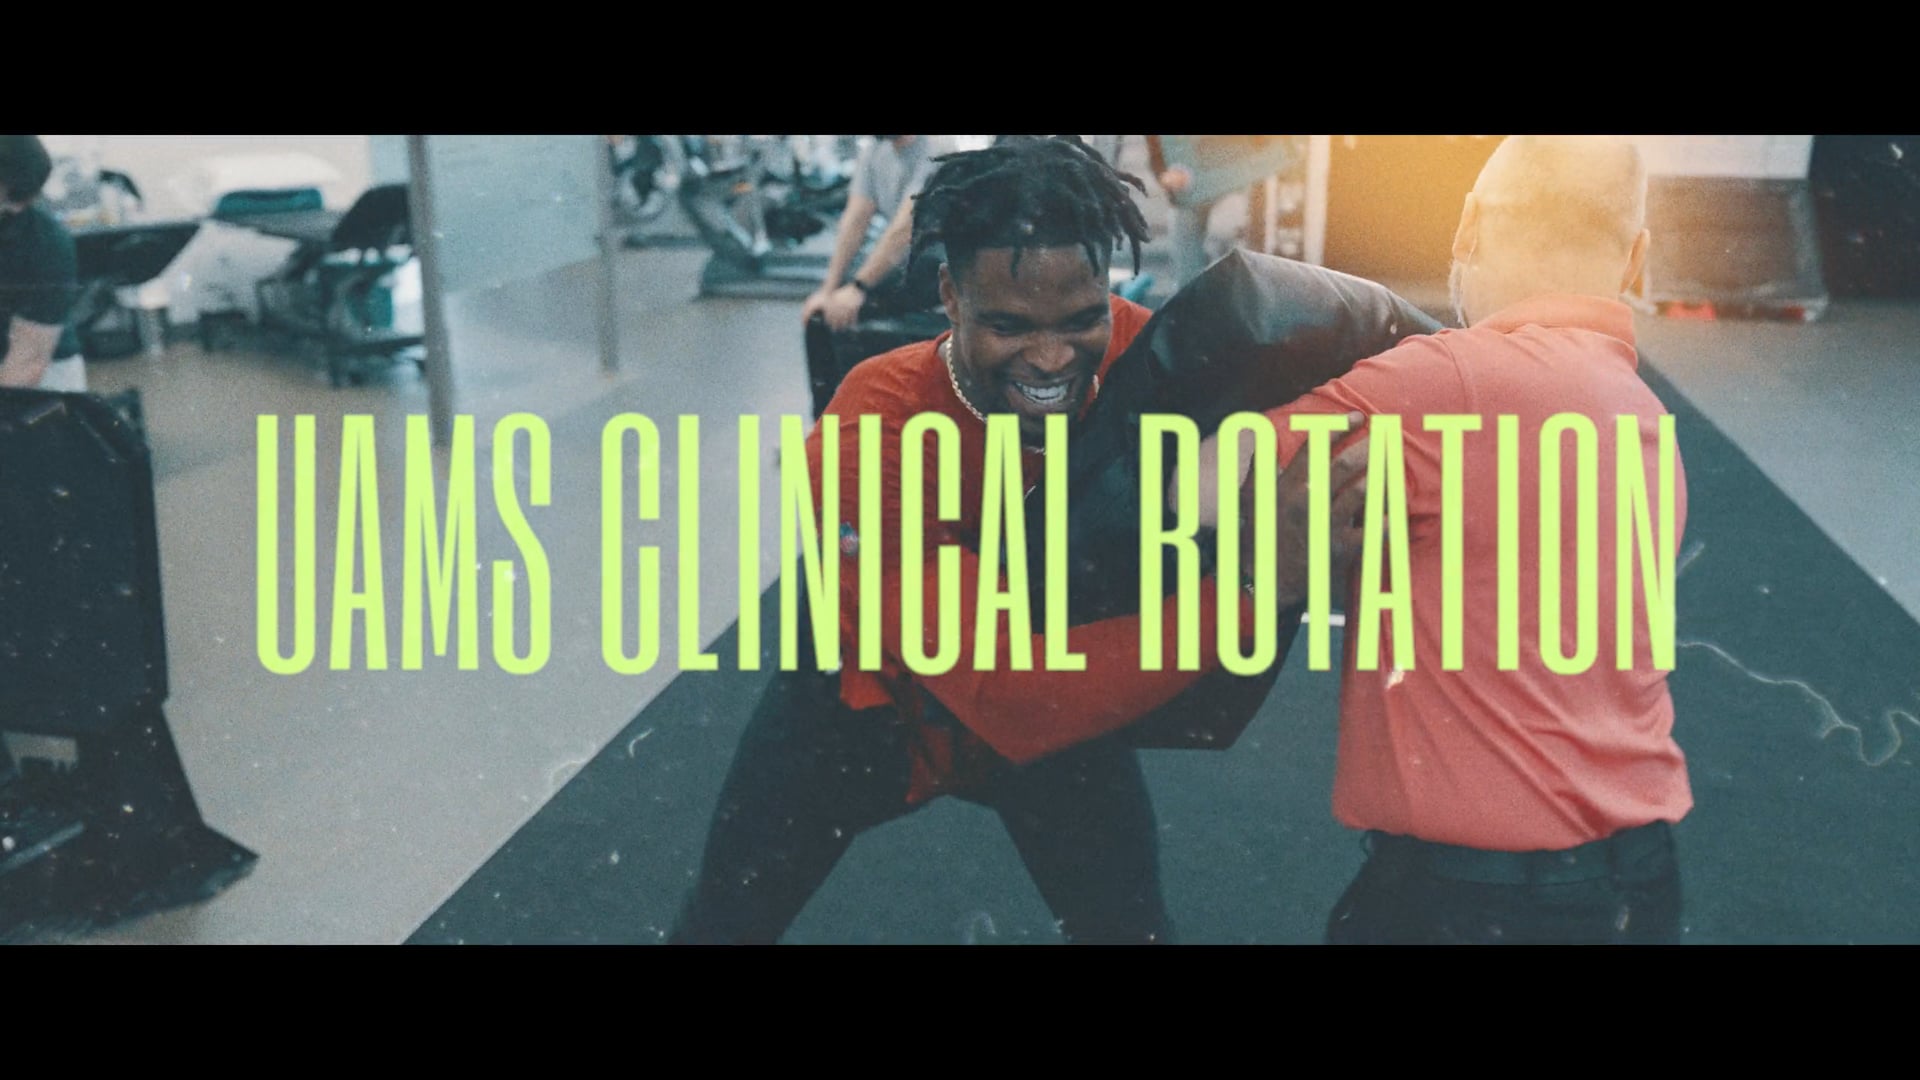 UAMS Clinical Rotation Promo